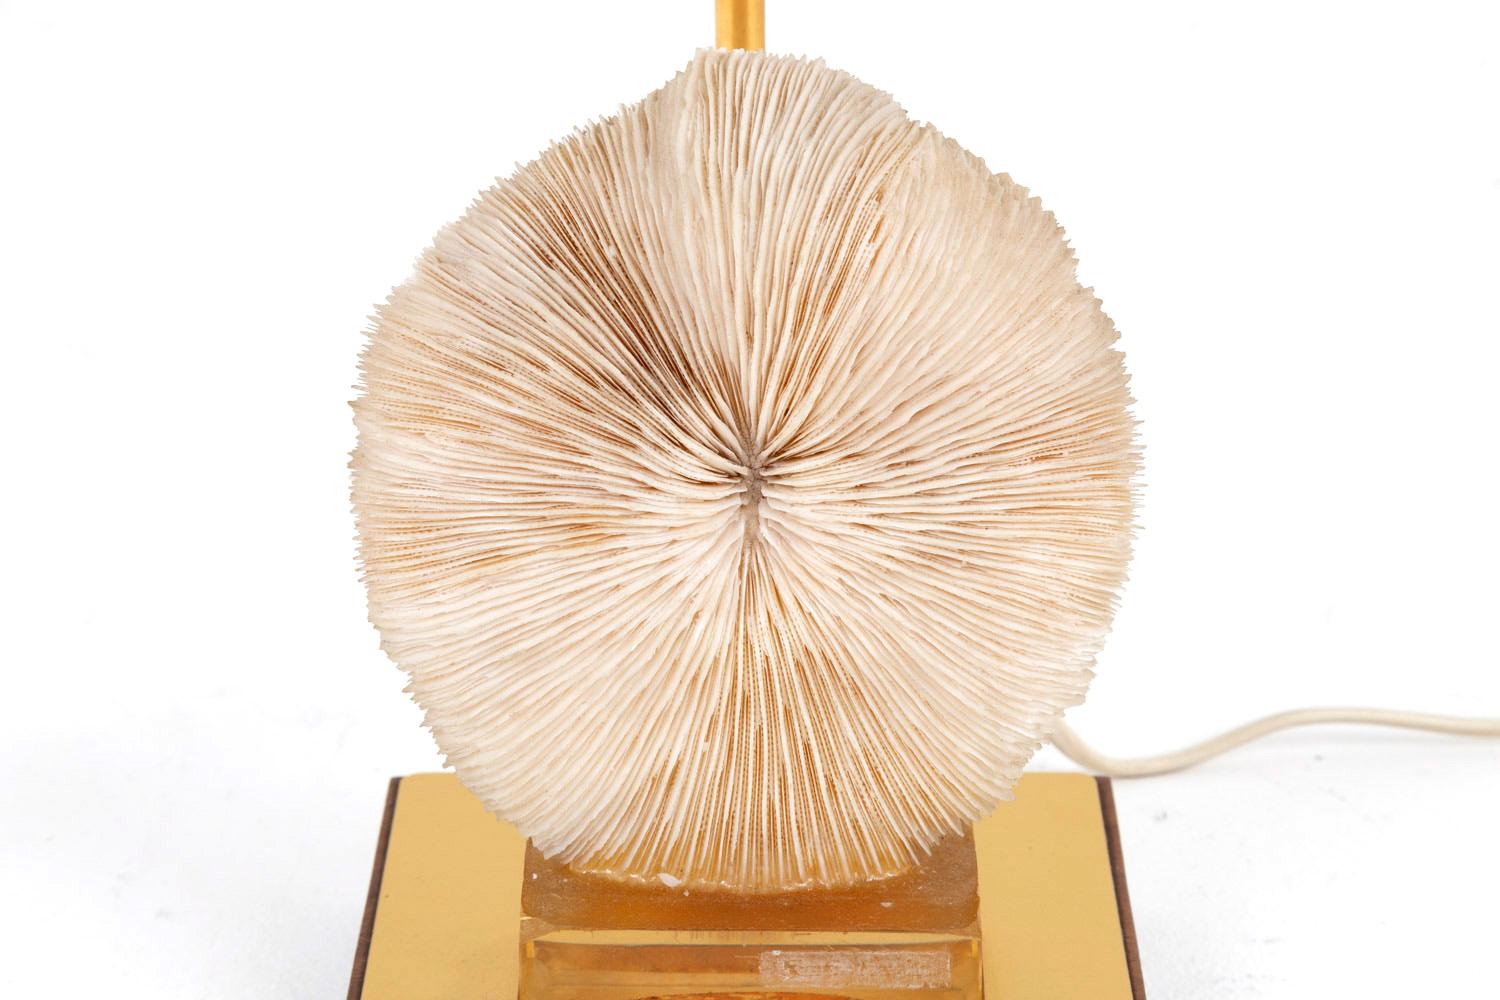 Lampe Fungia Fungites Koralle und vergoldetes Messing, 1970er Jahre (Ende des 20. Jahrhunderts) im Angebot